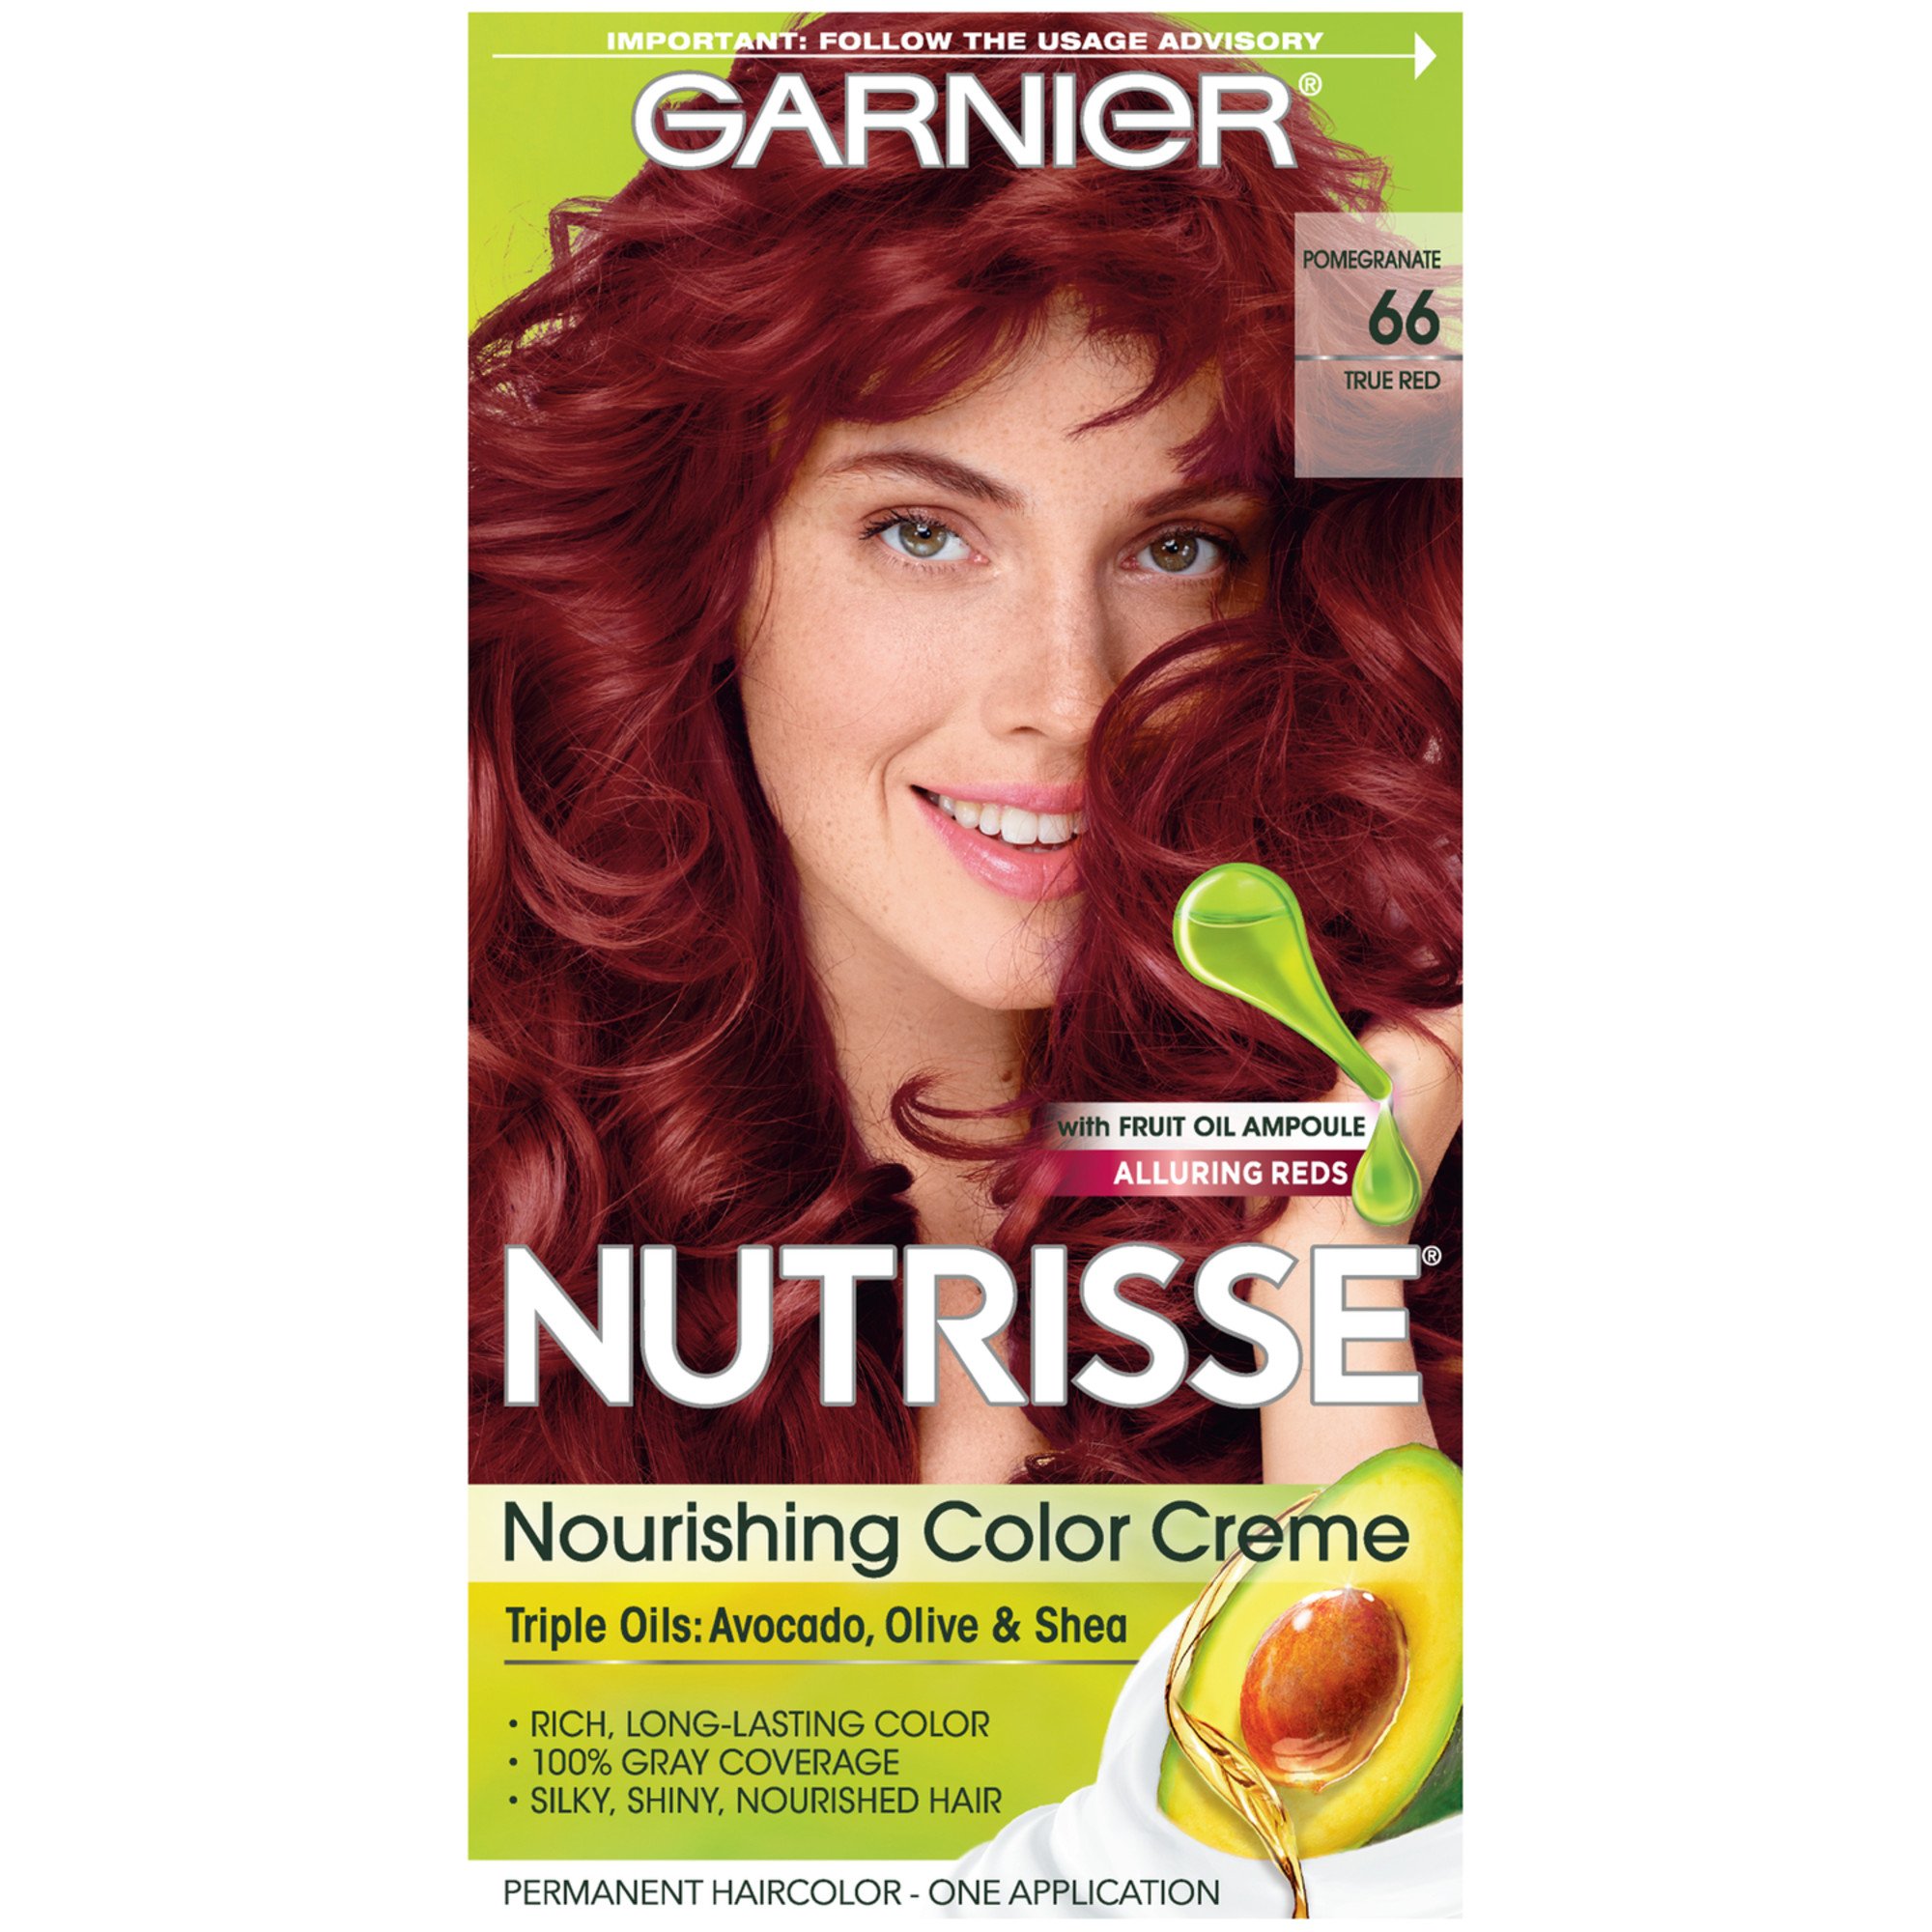 Garnier Nutrisse Nourishing Hair Color Creme 66 True Red (Pomegranate) -  Shop Hair Care at H-E-B